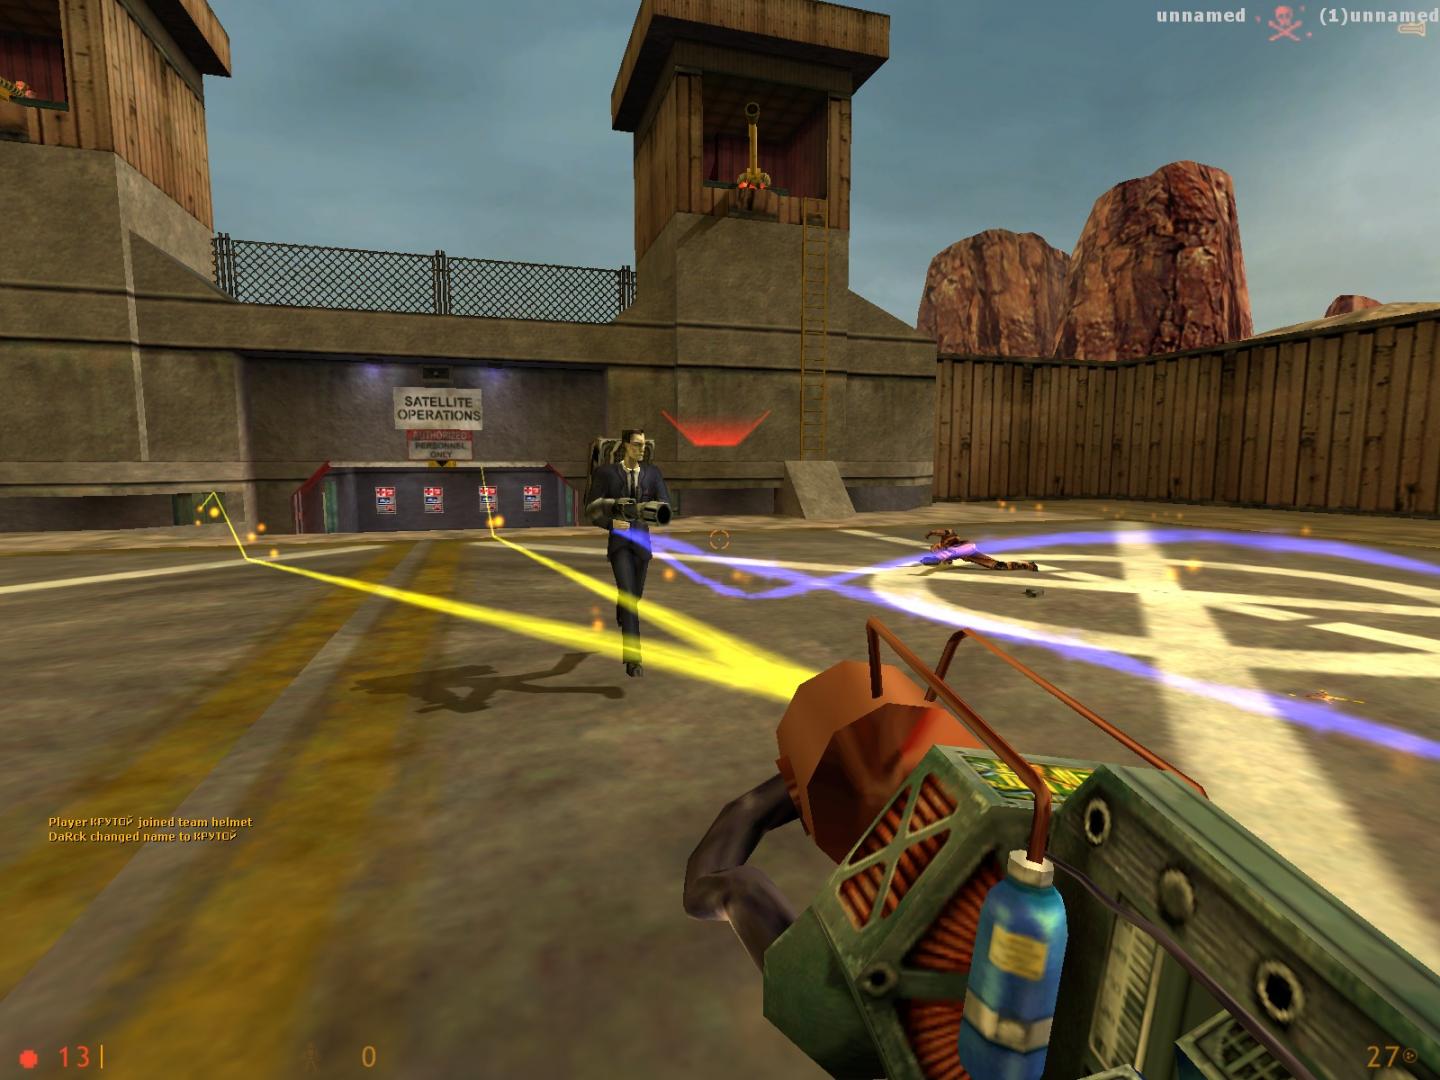 Counter Strike Source PC Game w/ Half Life 2: Deathmatch 4 Discs  14633098396